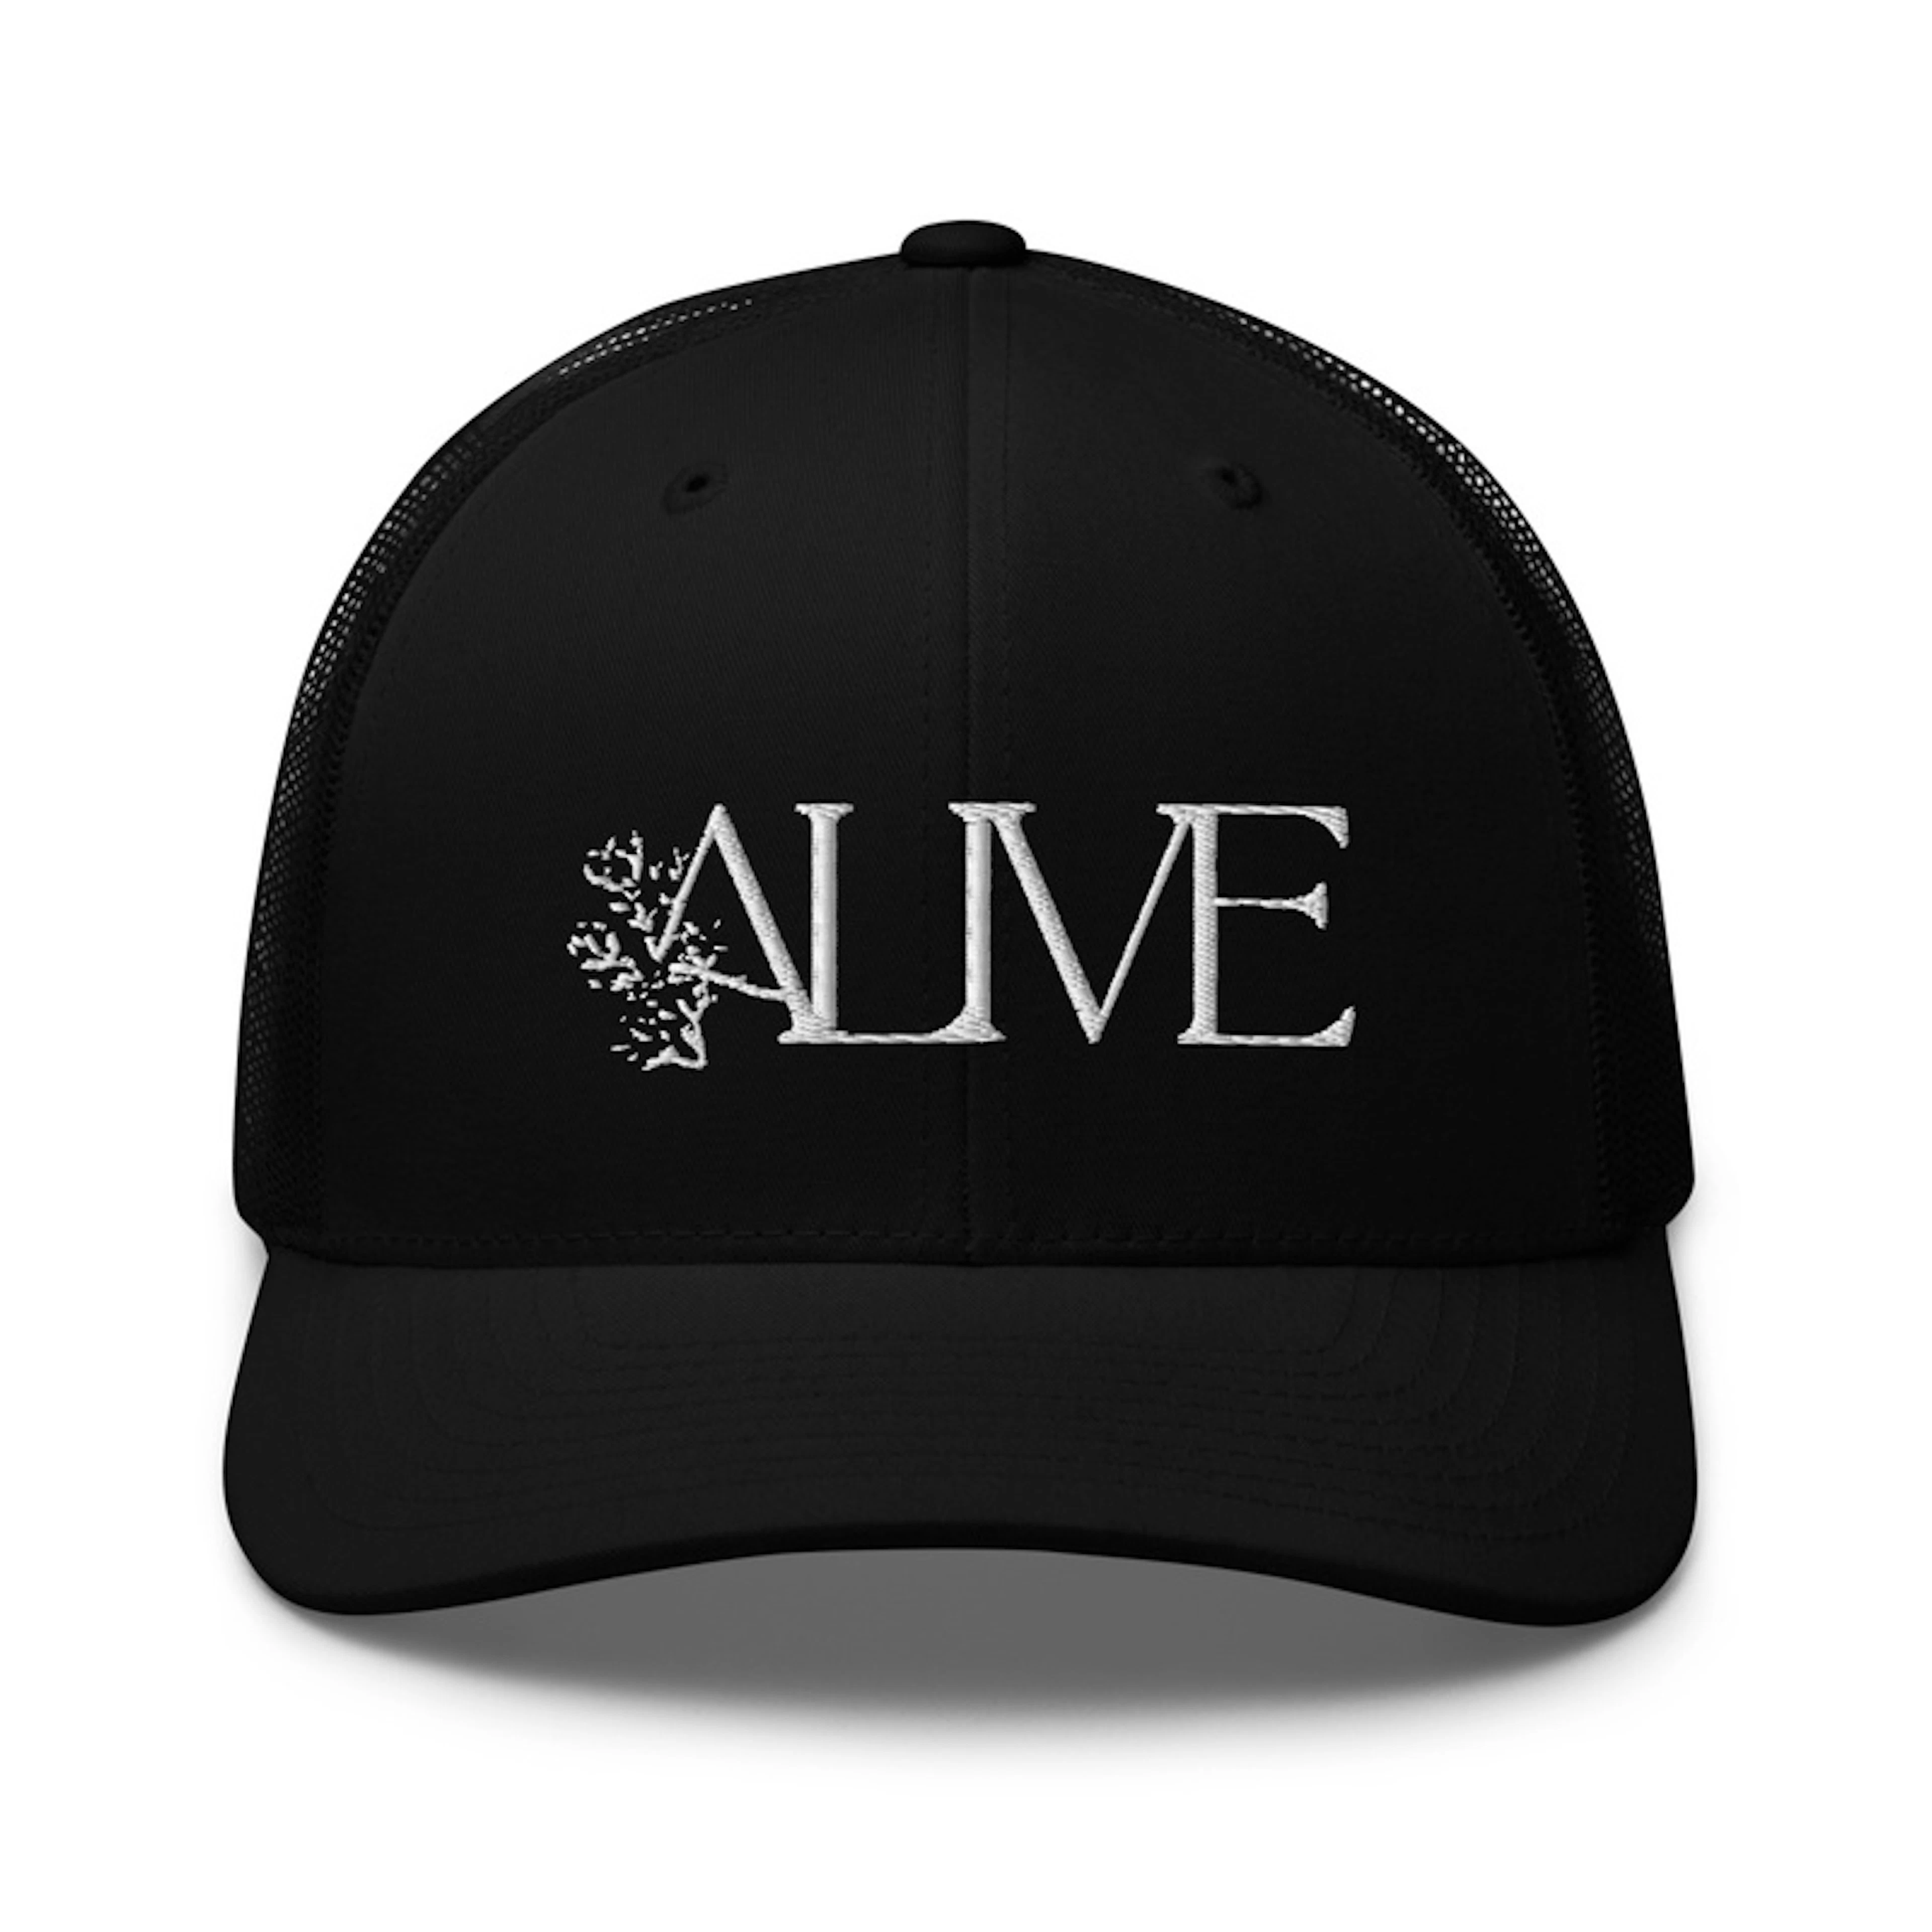 Alive Trucker Hat